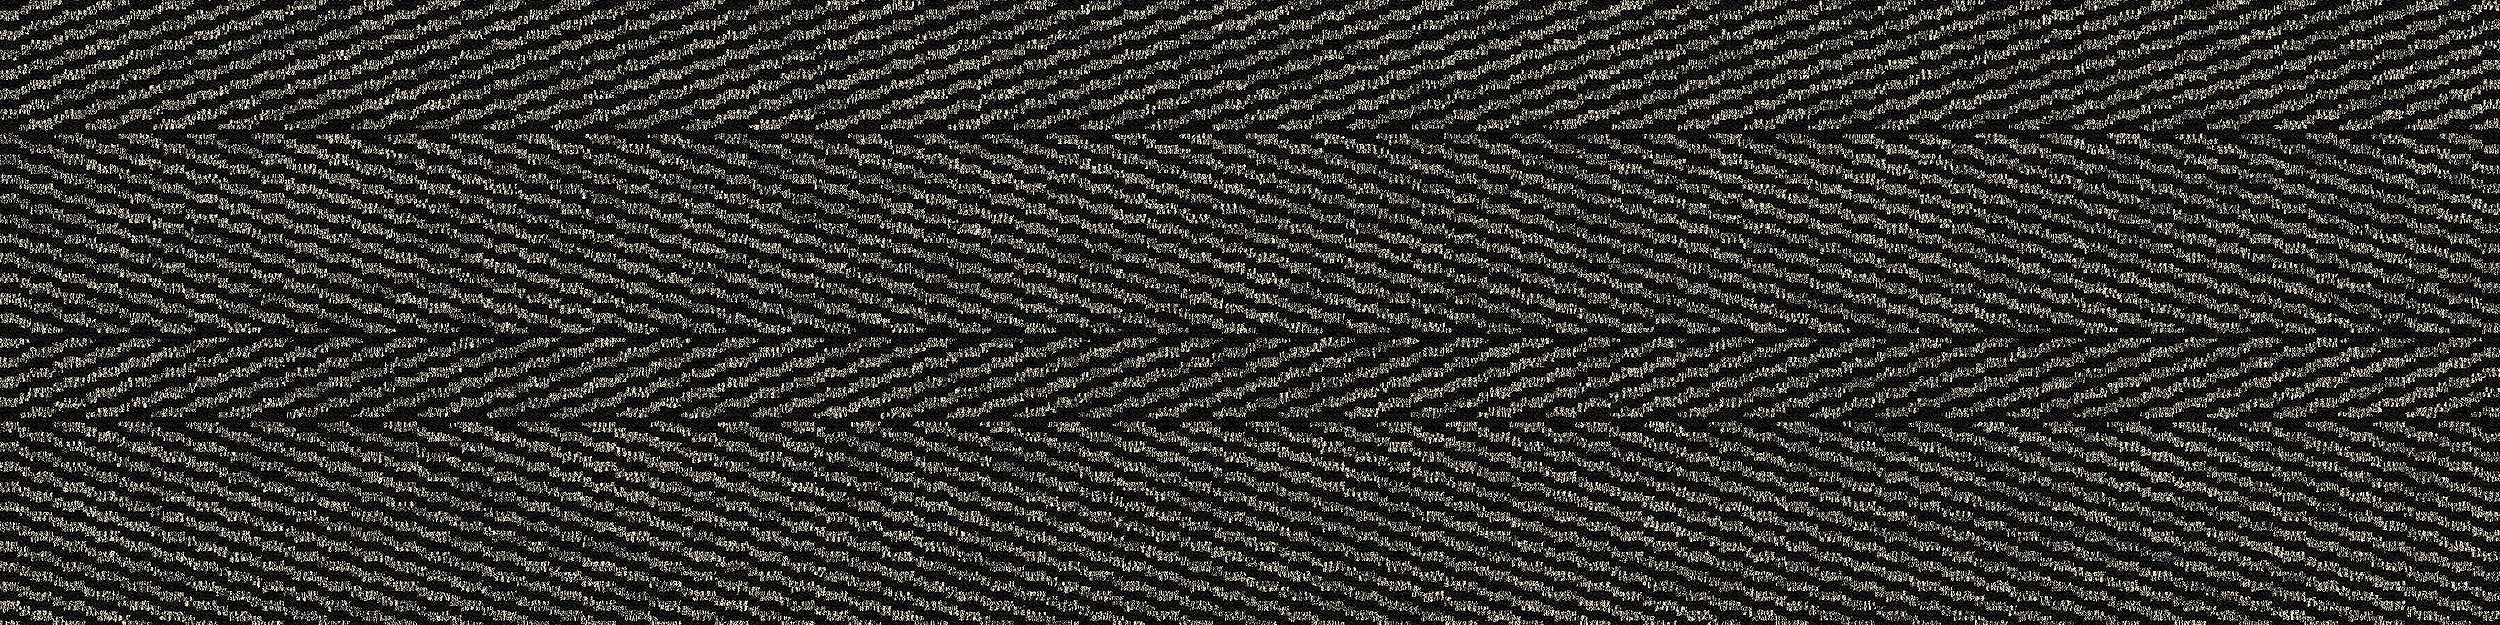 Stitch In Time Carpet Tile In Black Stitch image number 6